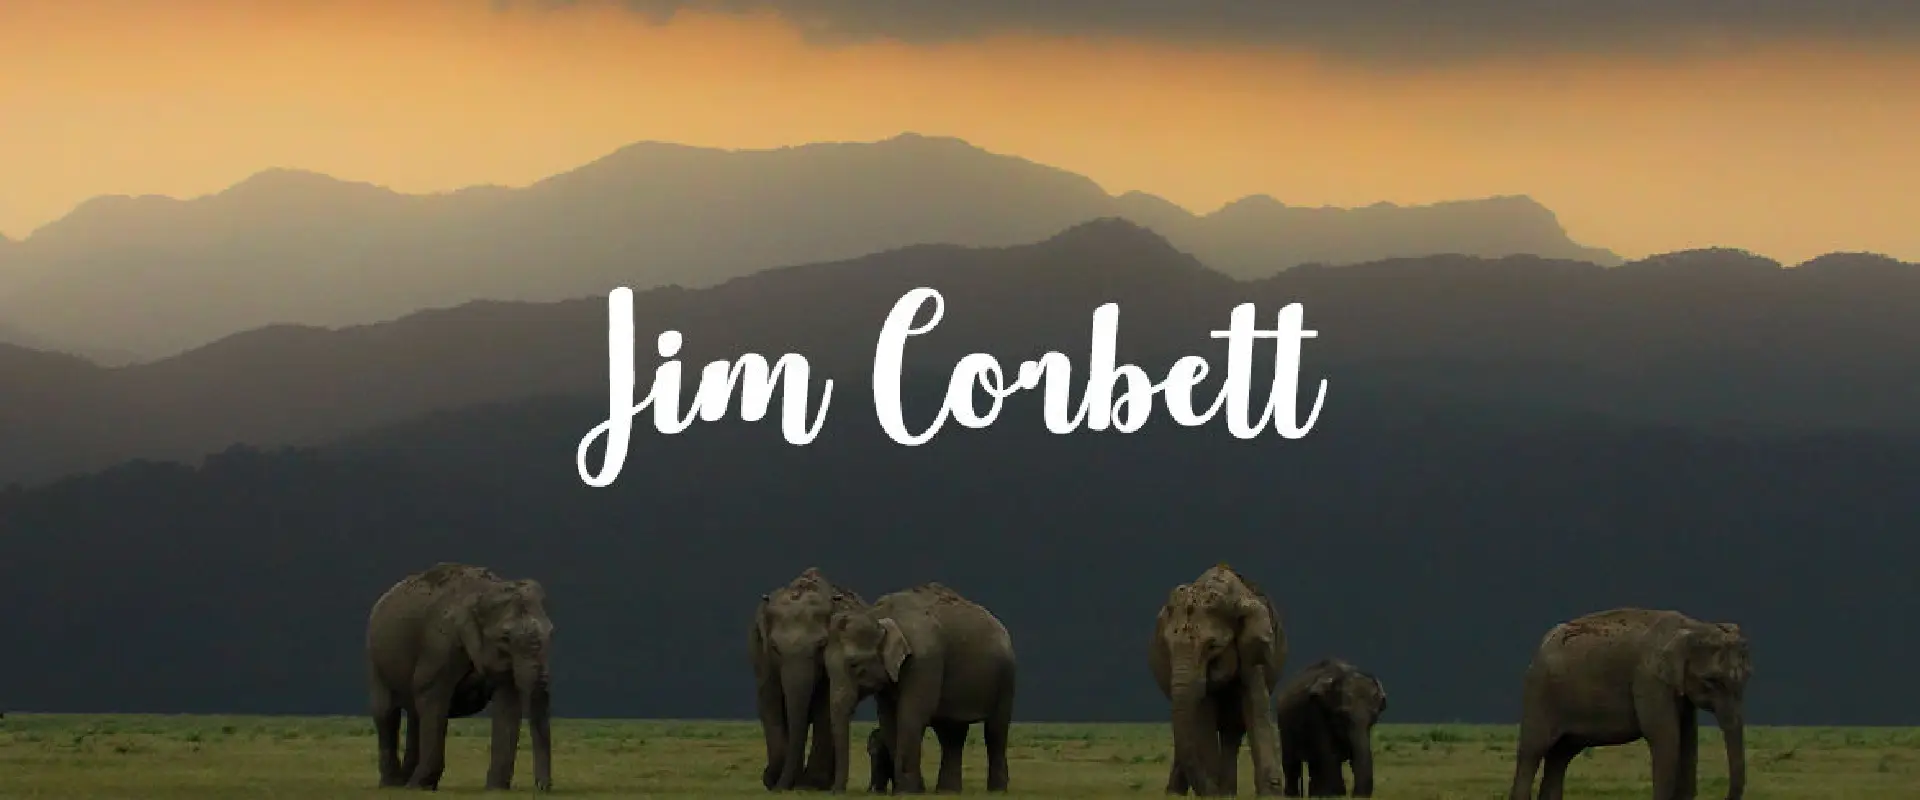 luxury Jim Corbett packages